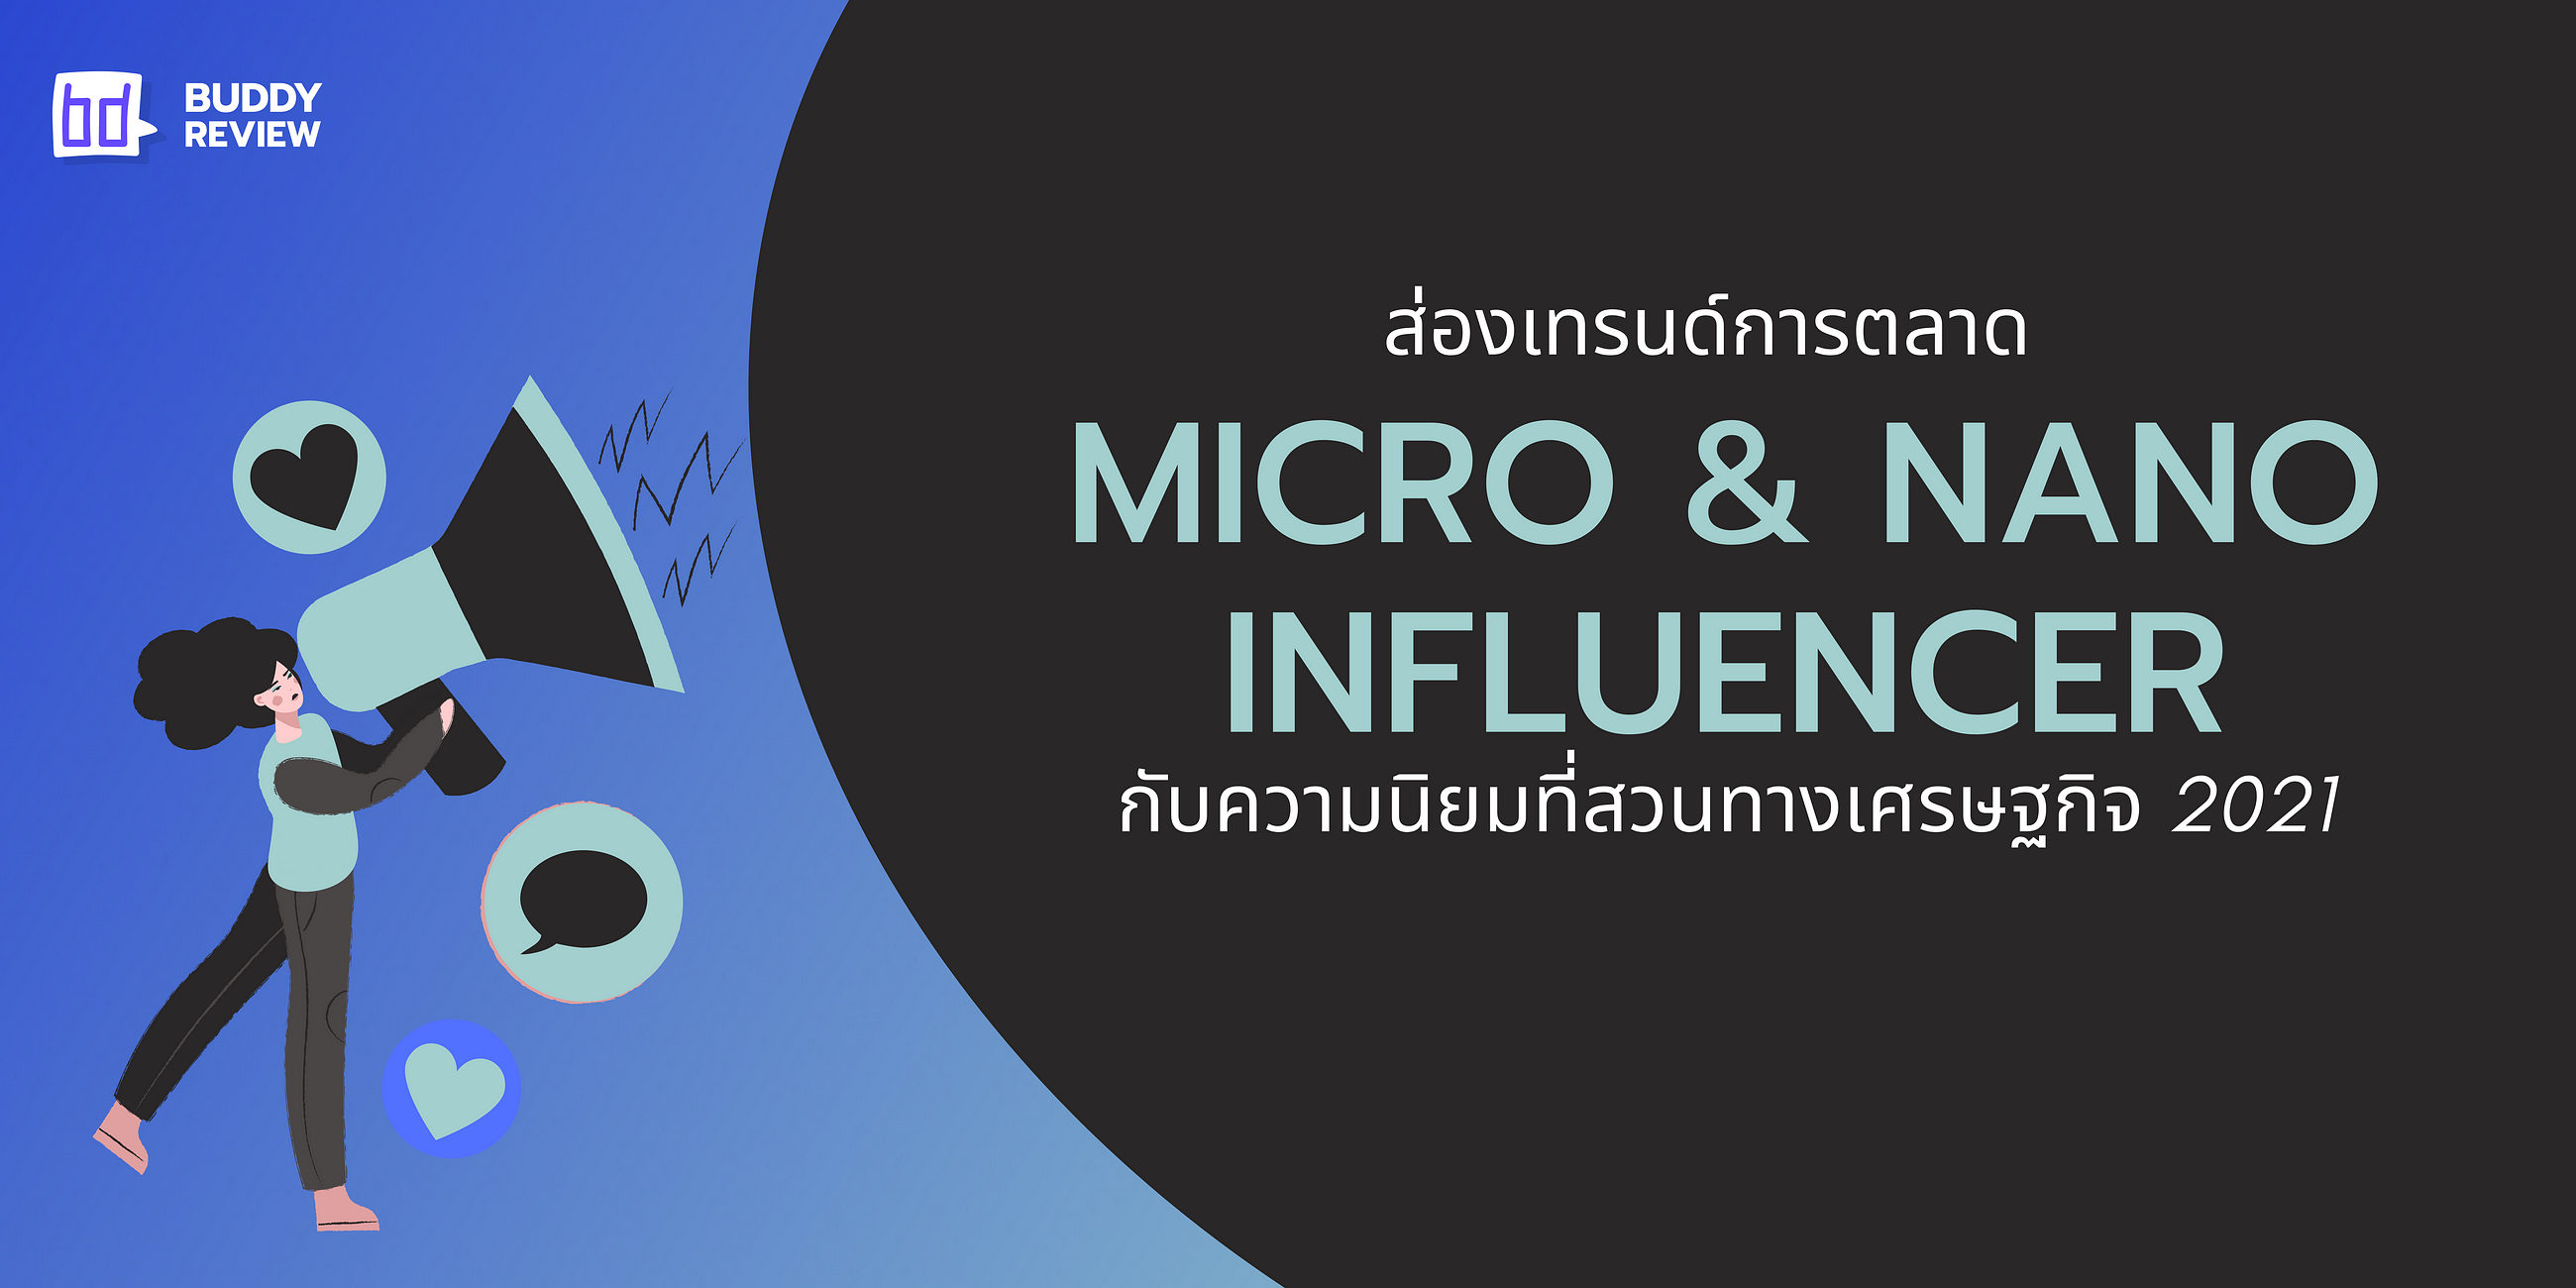 <div>Micro & Nano Influencer กับความนิยมที่สวนทางเศรษฐกิจ 2021</div>